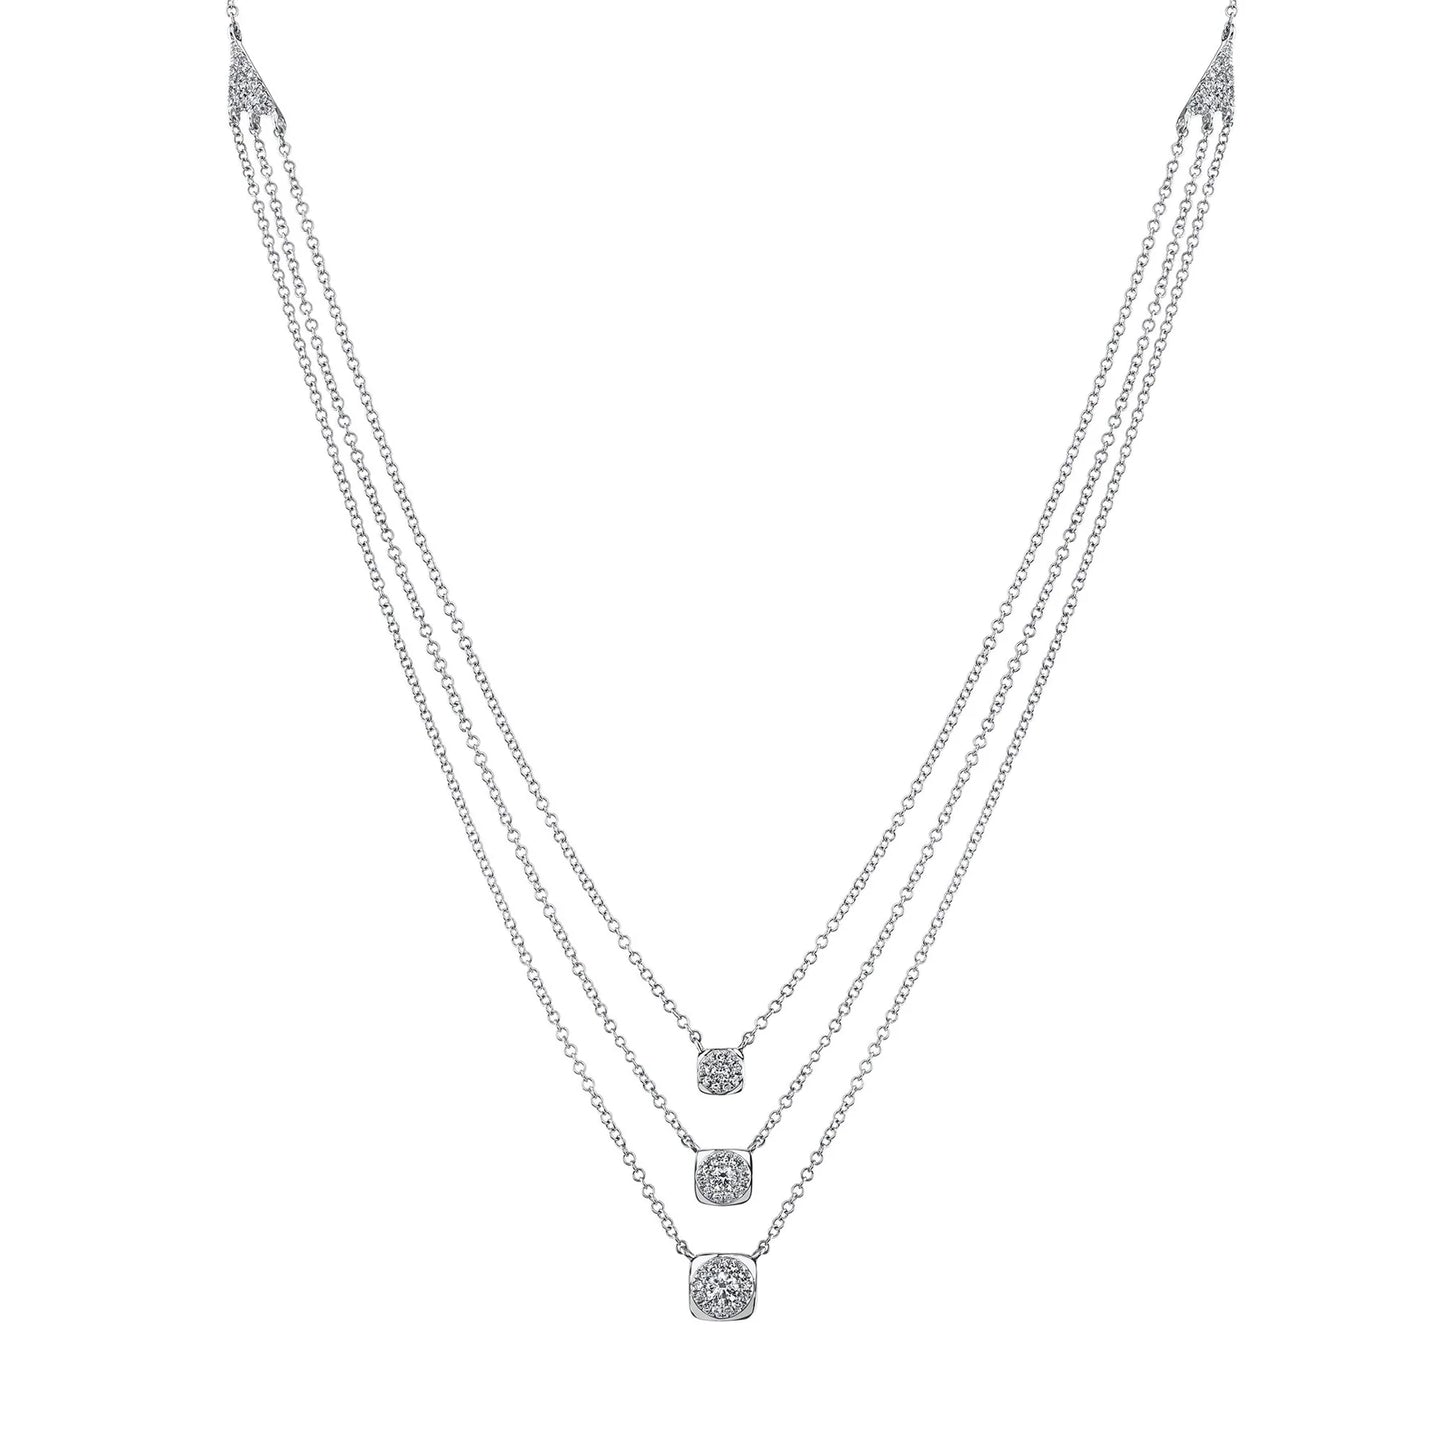 14K Gold 0.35 CT Diamond Layered Necklace Multi Row 3 Tier Pendant Chain Round Cut